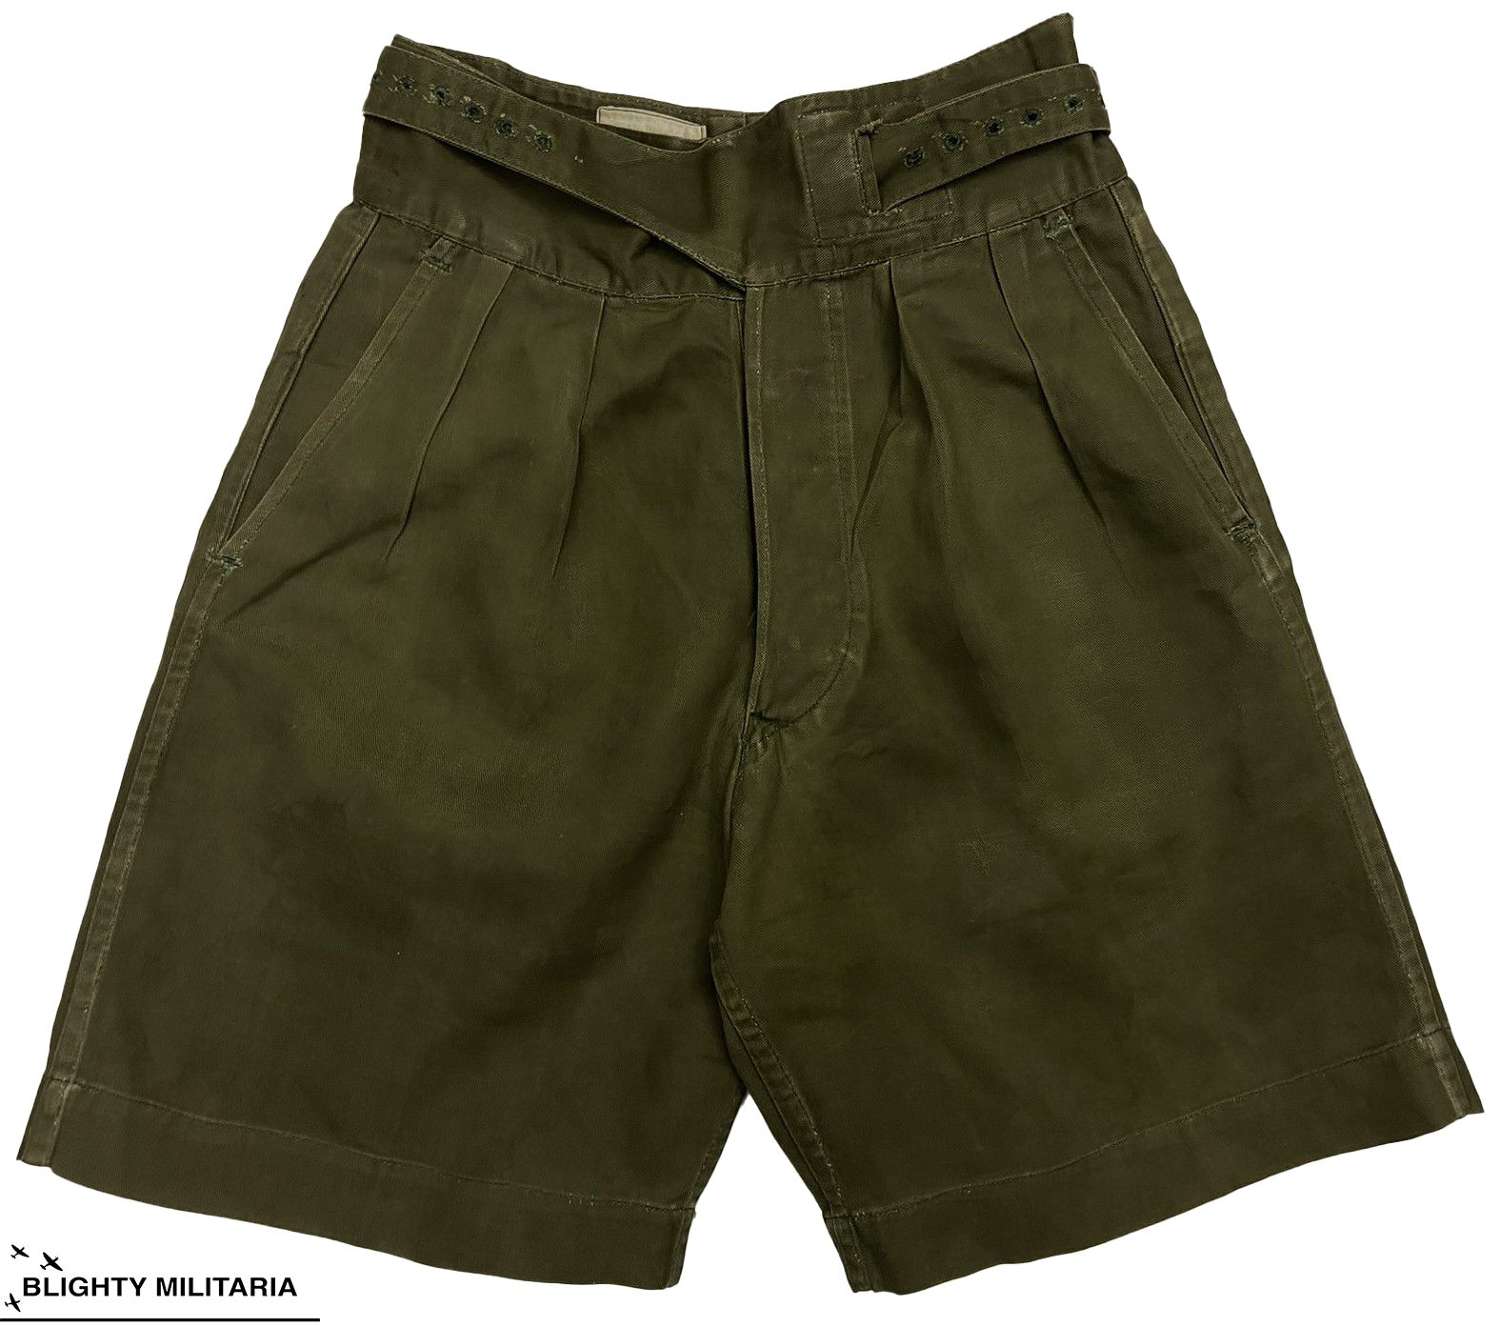 Original 1961 Dated 1950 Pattern Jungle Green Shorts - Size 3